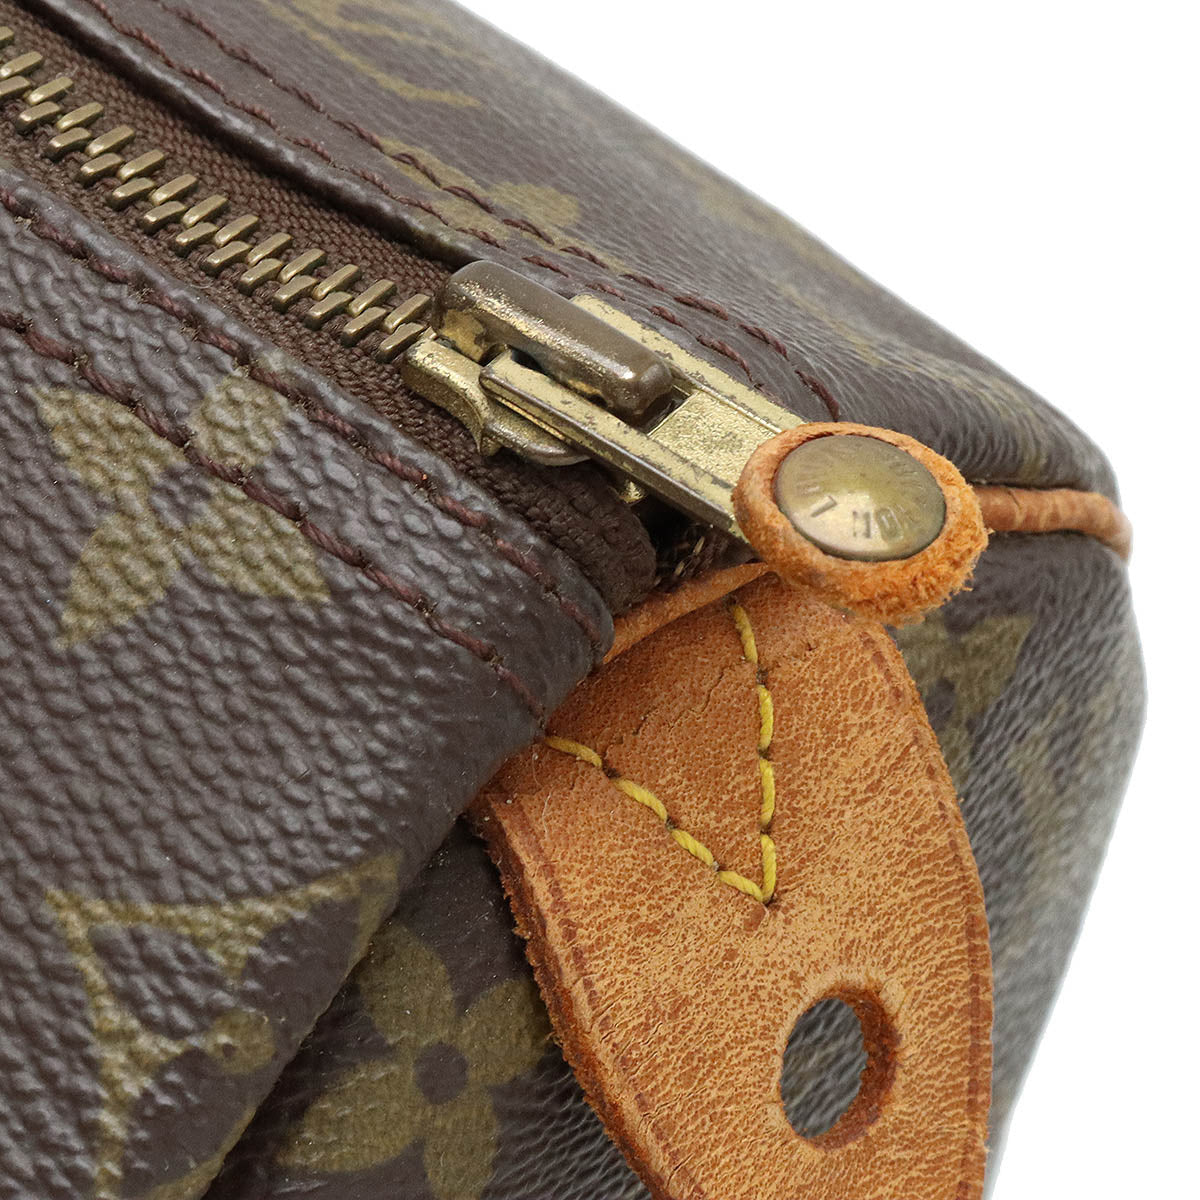 Louis Vuitton Monograms Speed 40 Handbags M41522 Travel Bag M41522